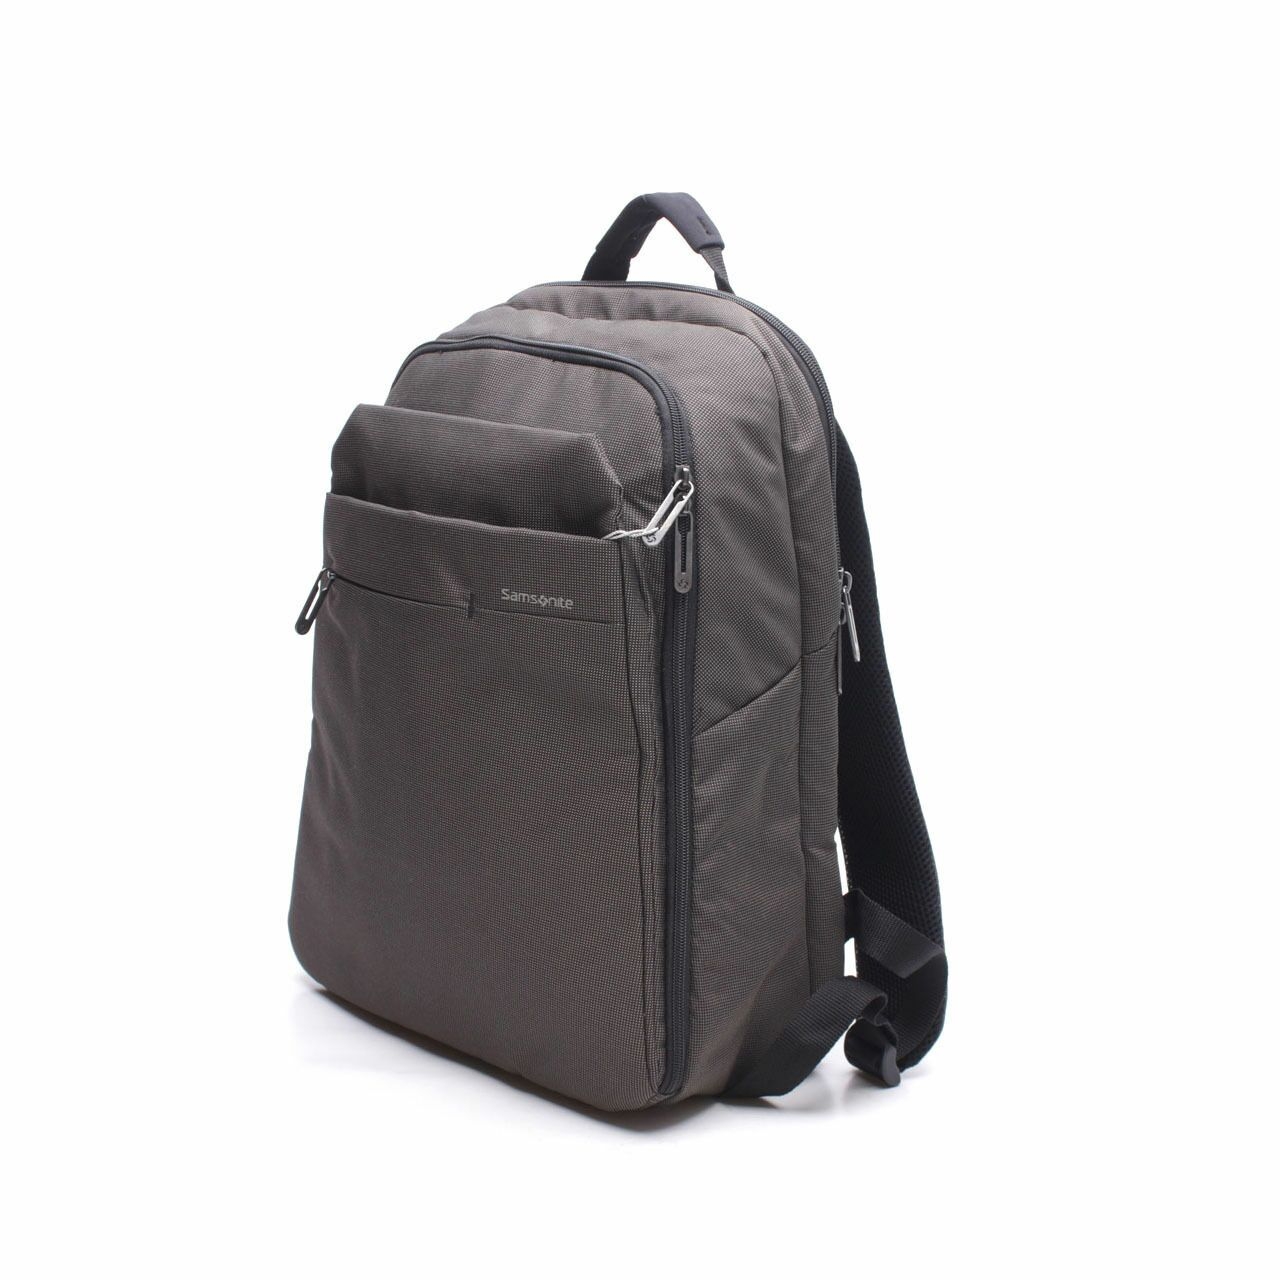 Samsonite Dark Grey Laptop Backpack